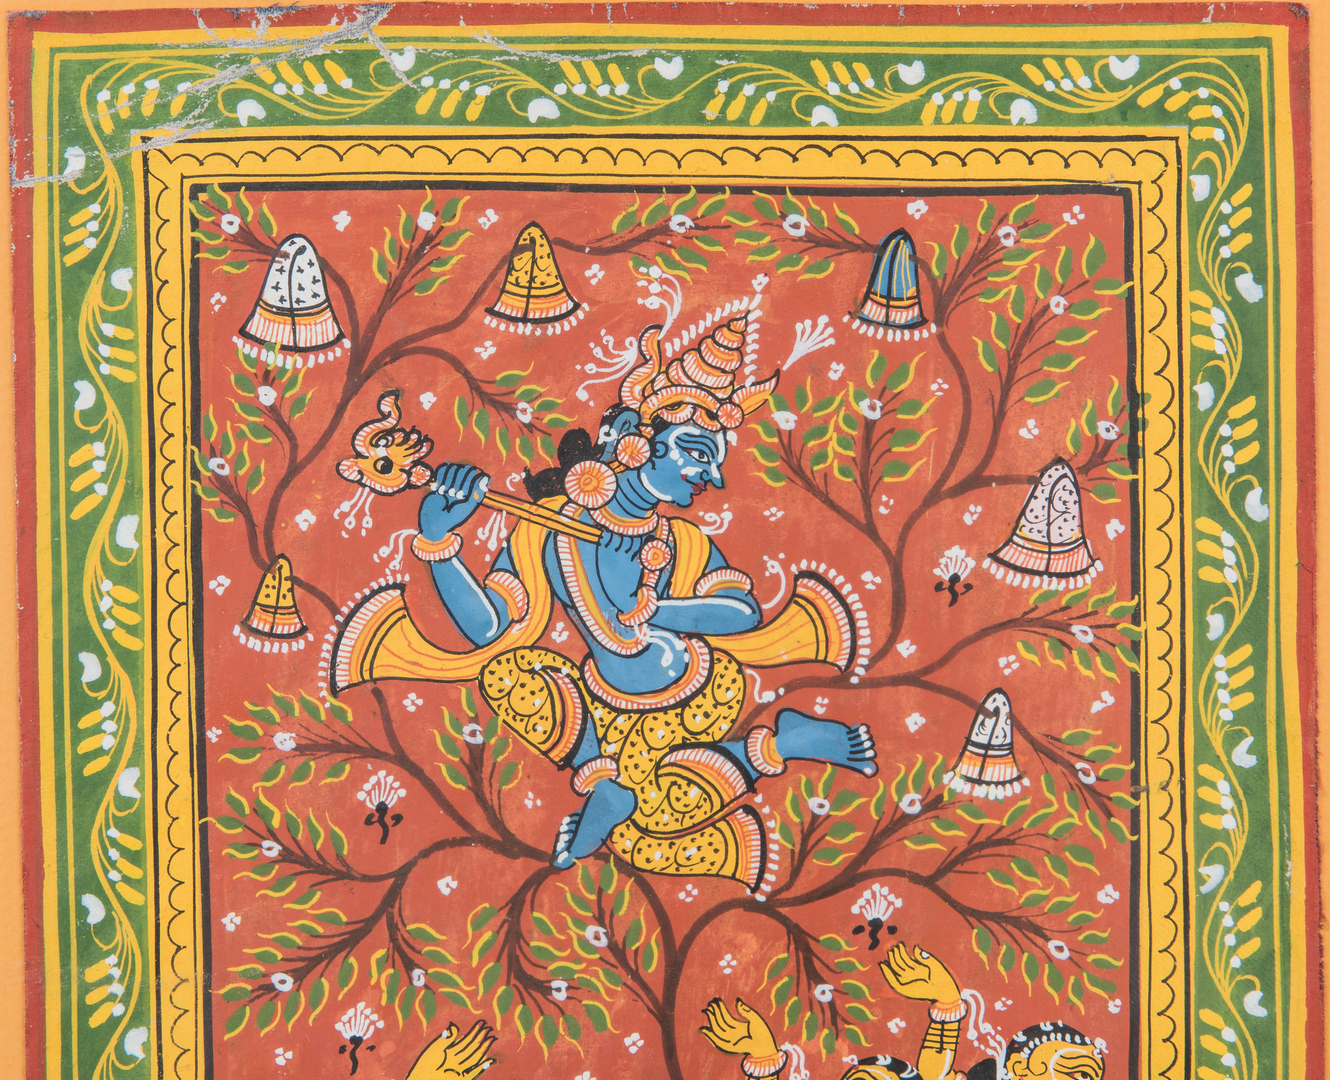 Lot 1104: 6 Asian Works of Art, incl. Mughal Paintings